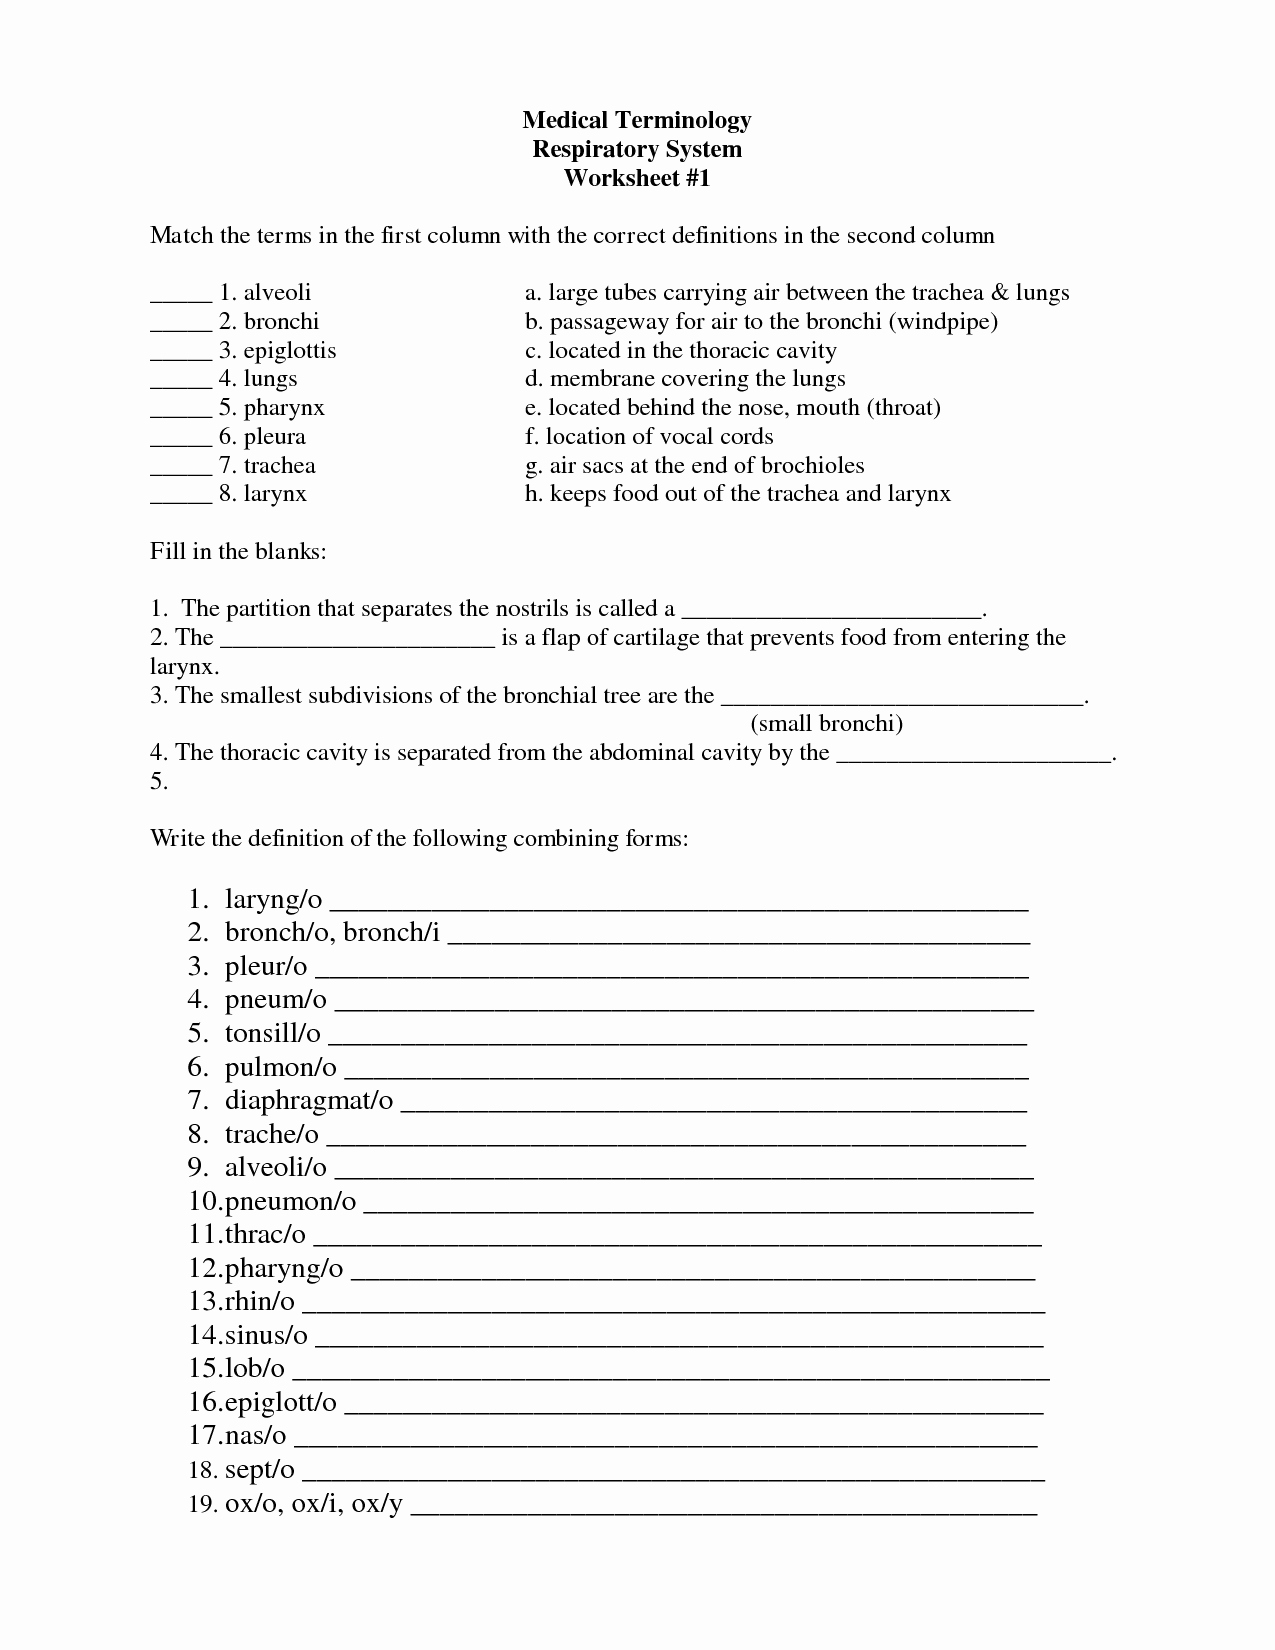 Medical Terminology Abbreviations Worksheet Lovely Awesome Medical Terminology Worksheets Ladyk